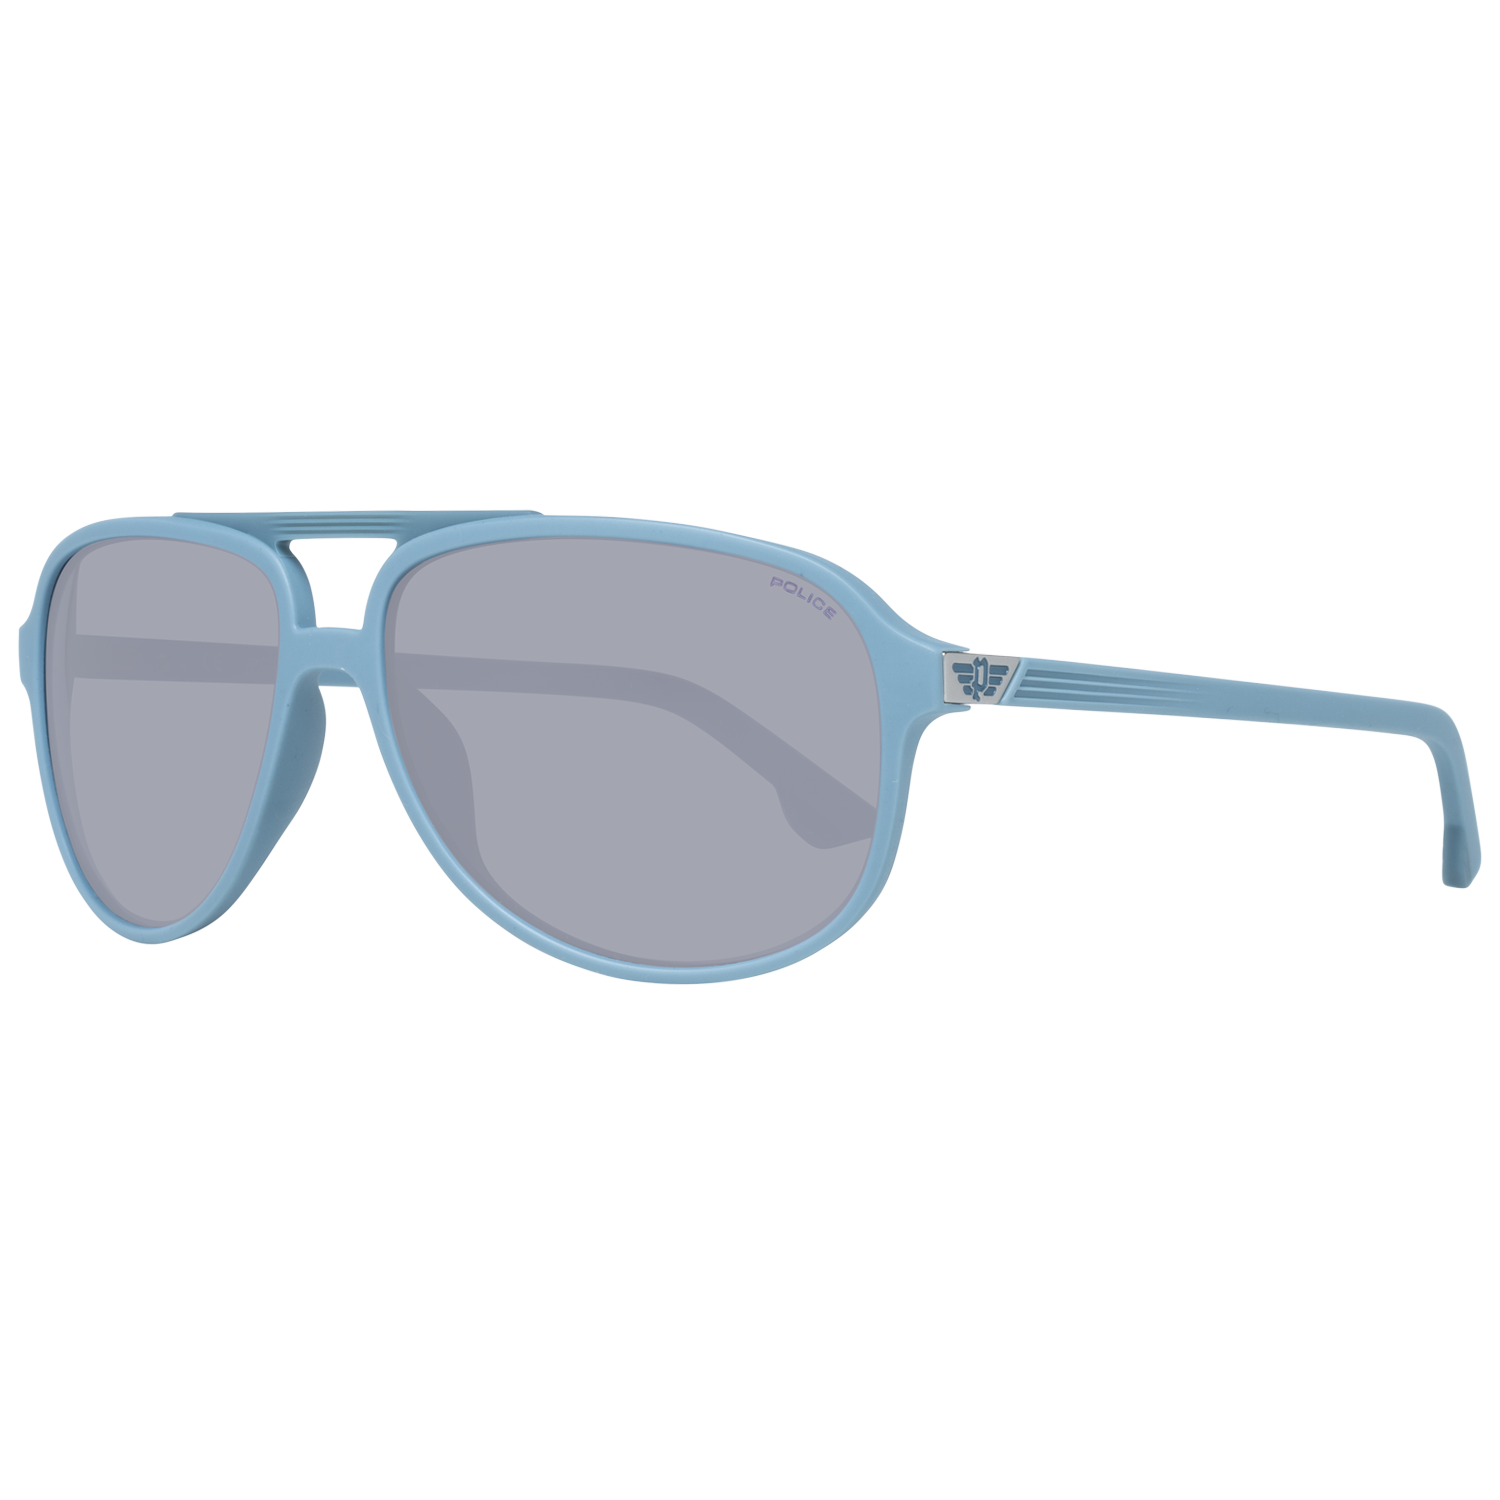 Police Sunglasses Police Sunglasses Men's SPL962 7H1X 60 Eyeglasses Eyewear UK USA Australia 